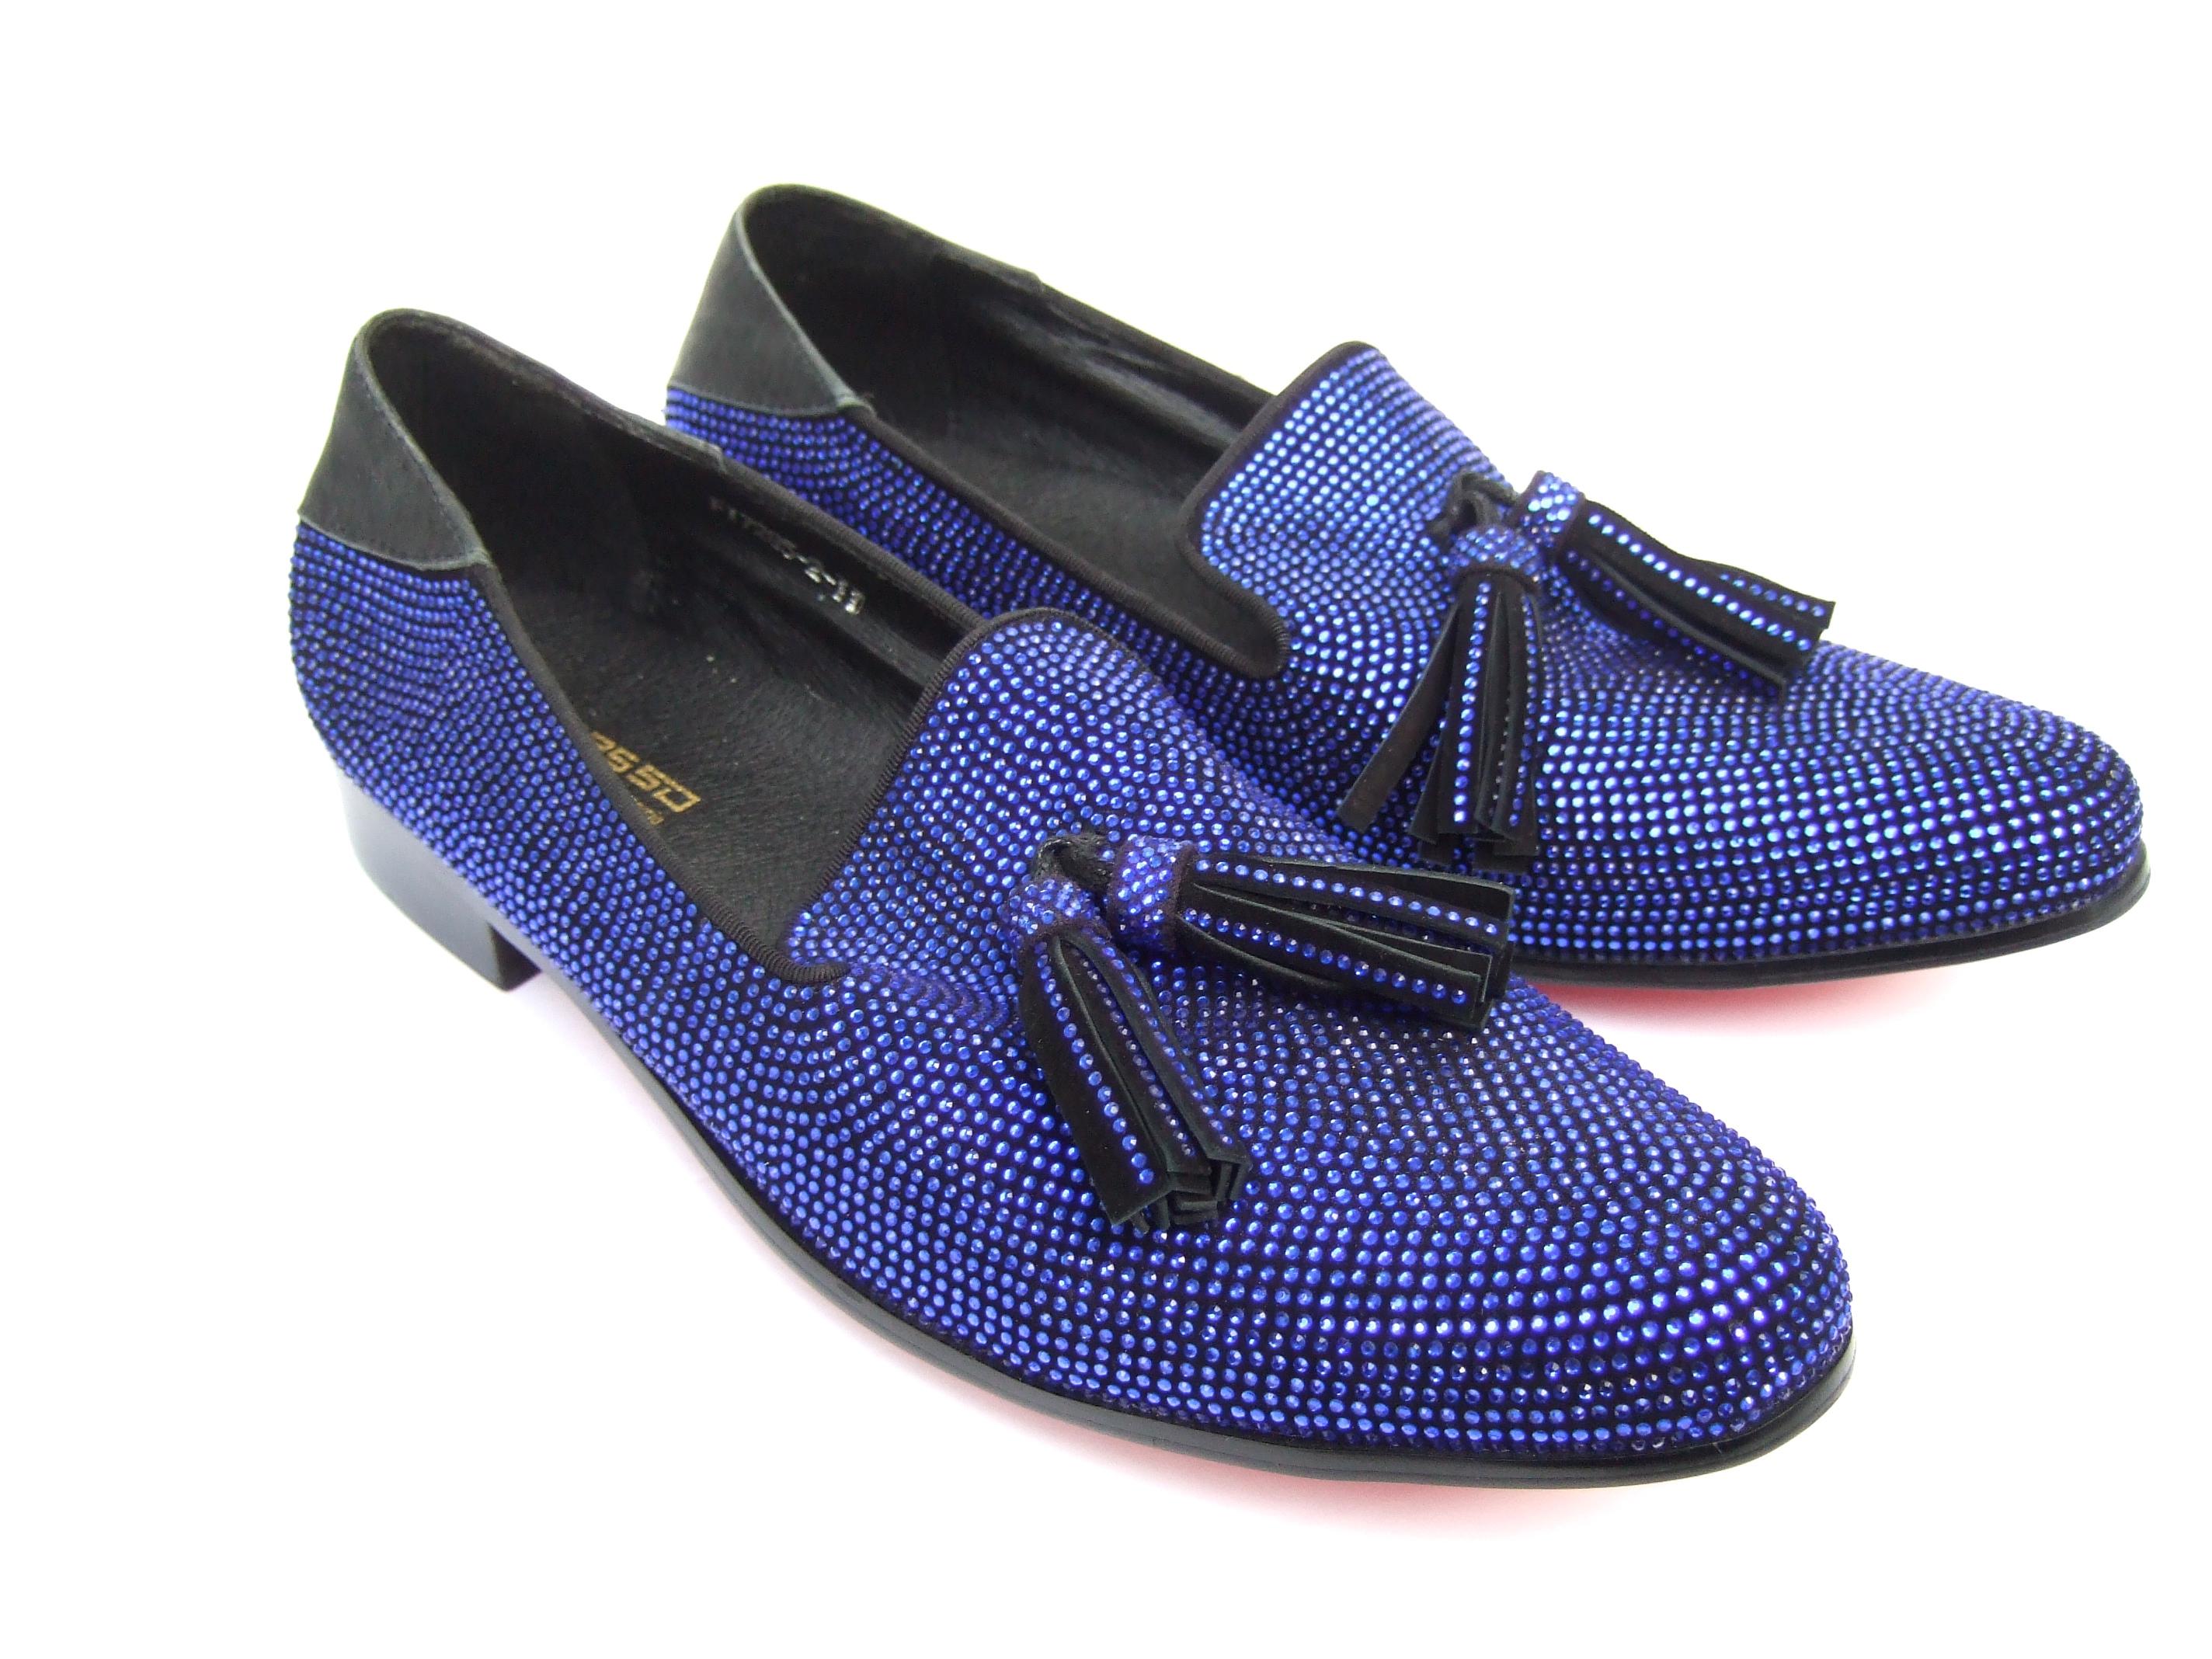 Men's Cobalt Blue Jeweled Crystal Tassel Slipper Dress Shoes Size 11 21st c 3